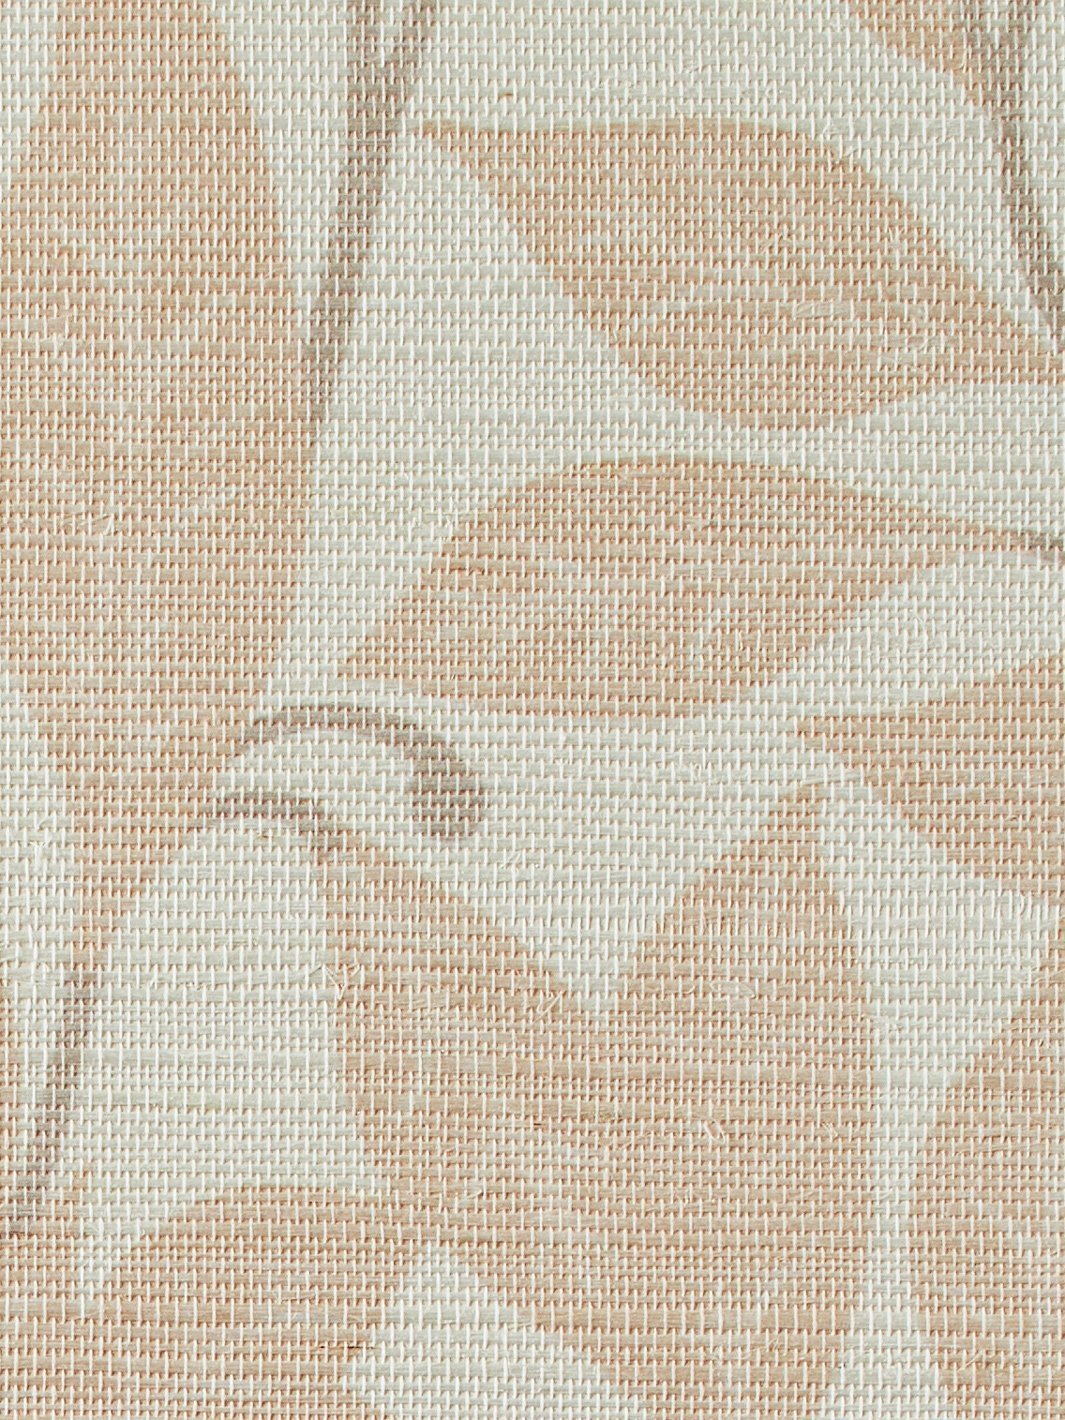 'Orchard Leaves' Grasscloth' Wallpaper by Wallshoppe - Blush